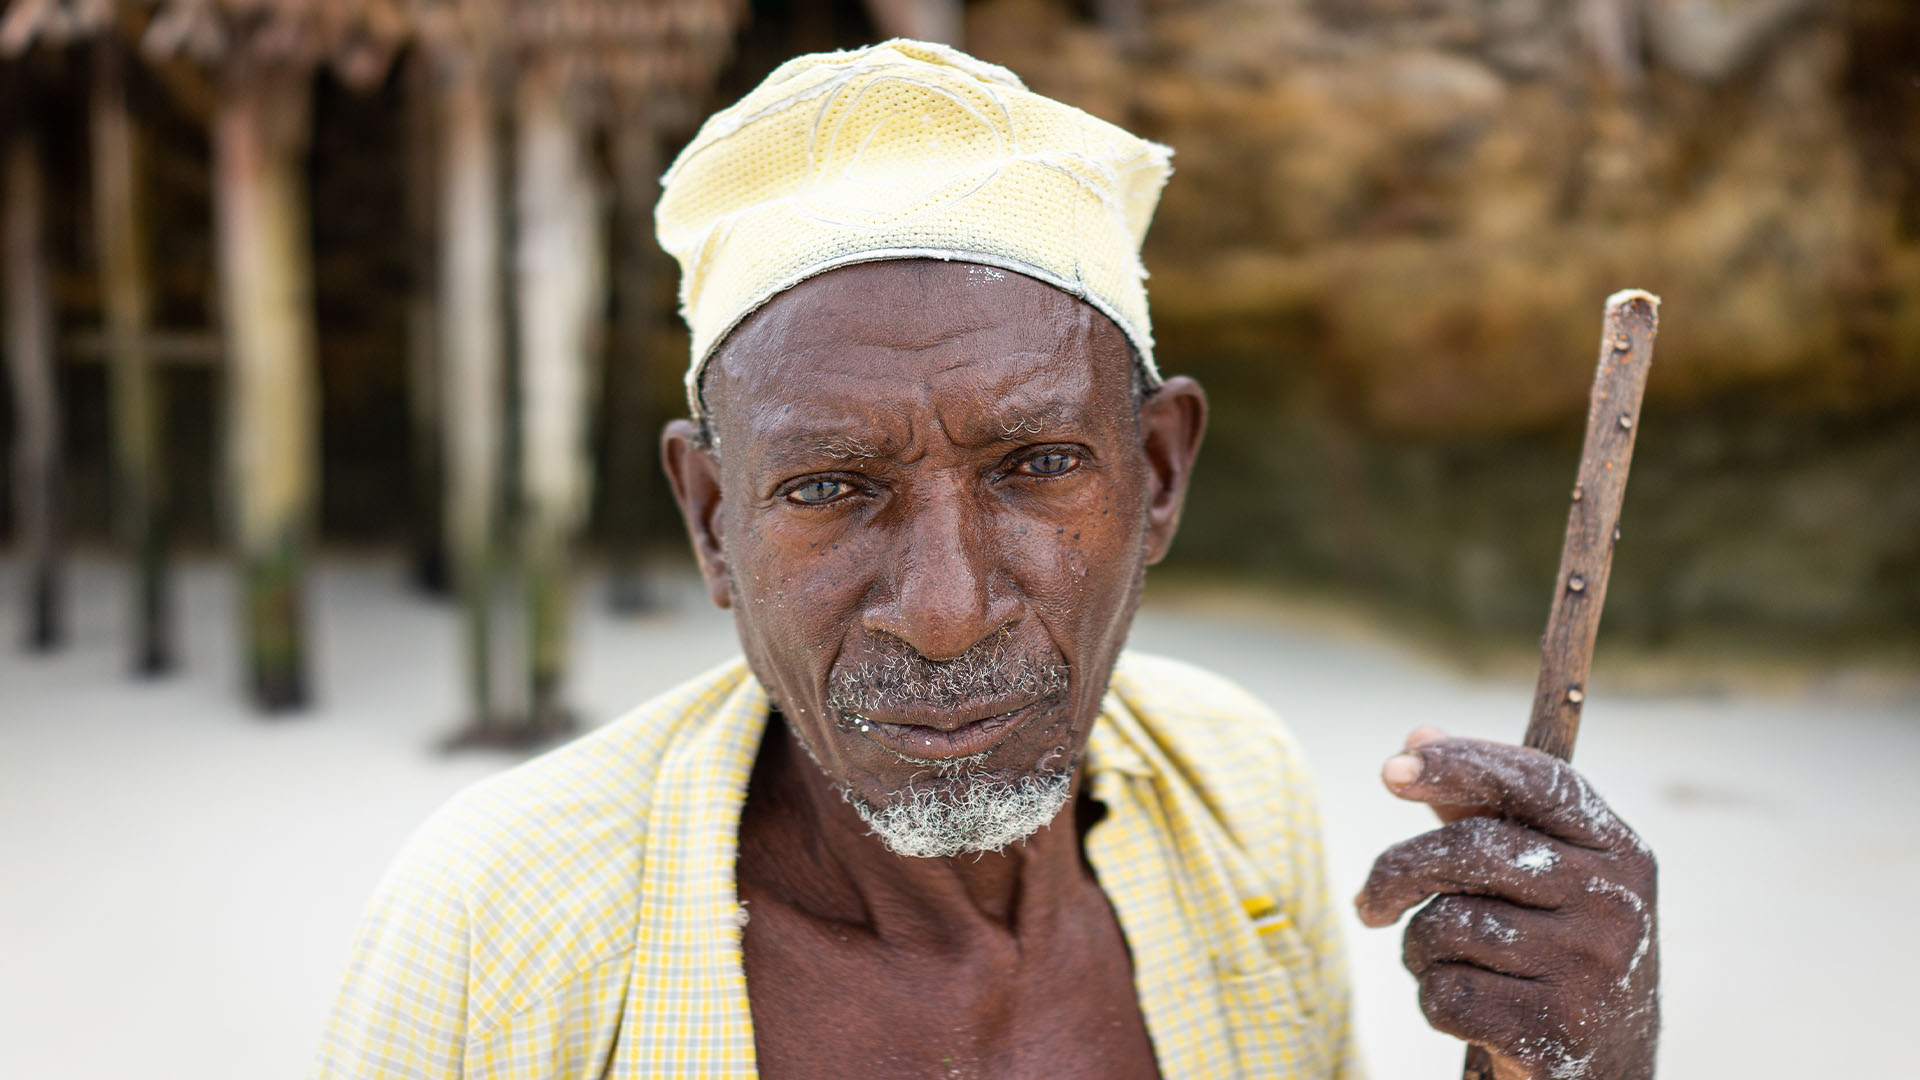 Elderly African man holding stick